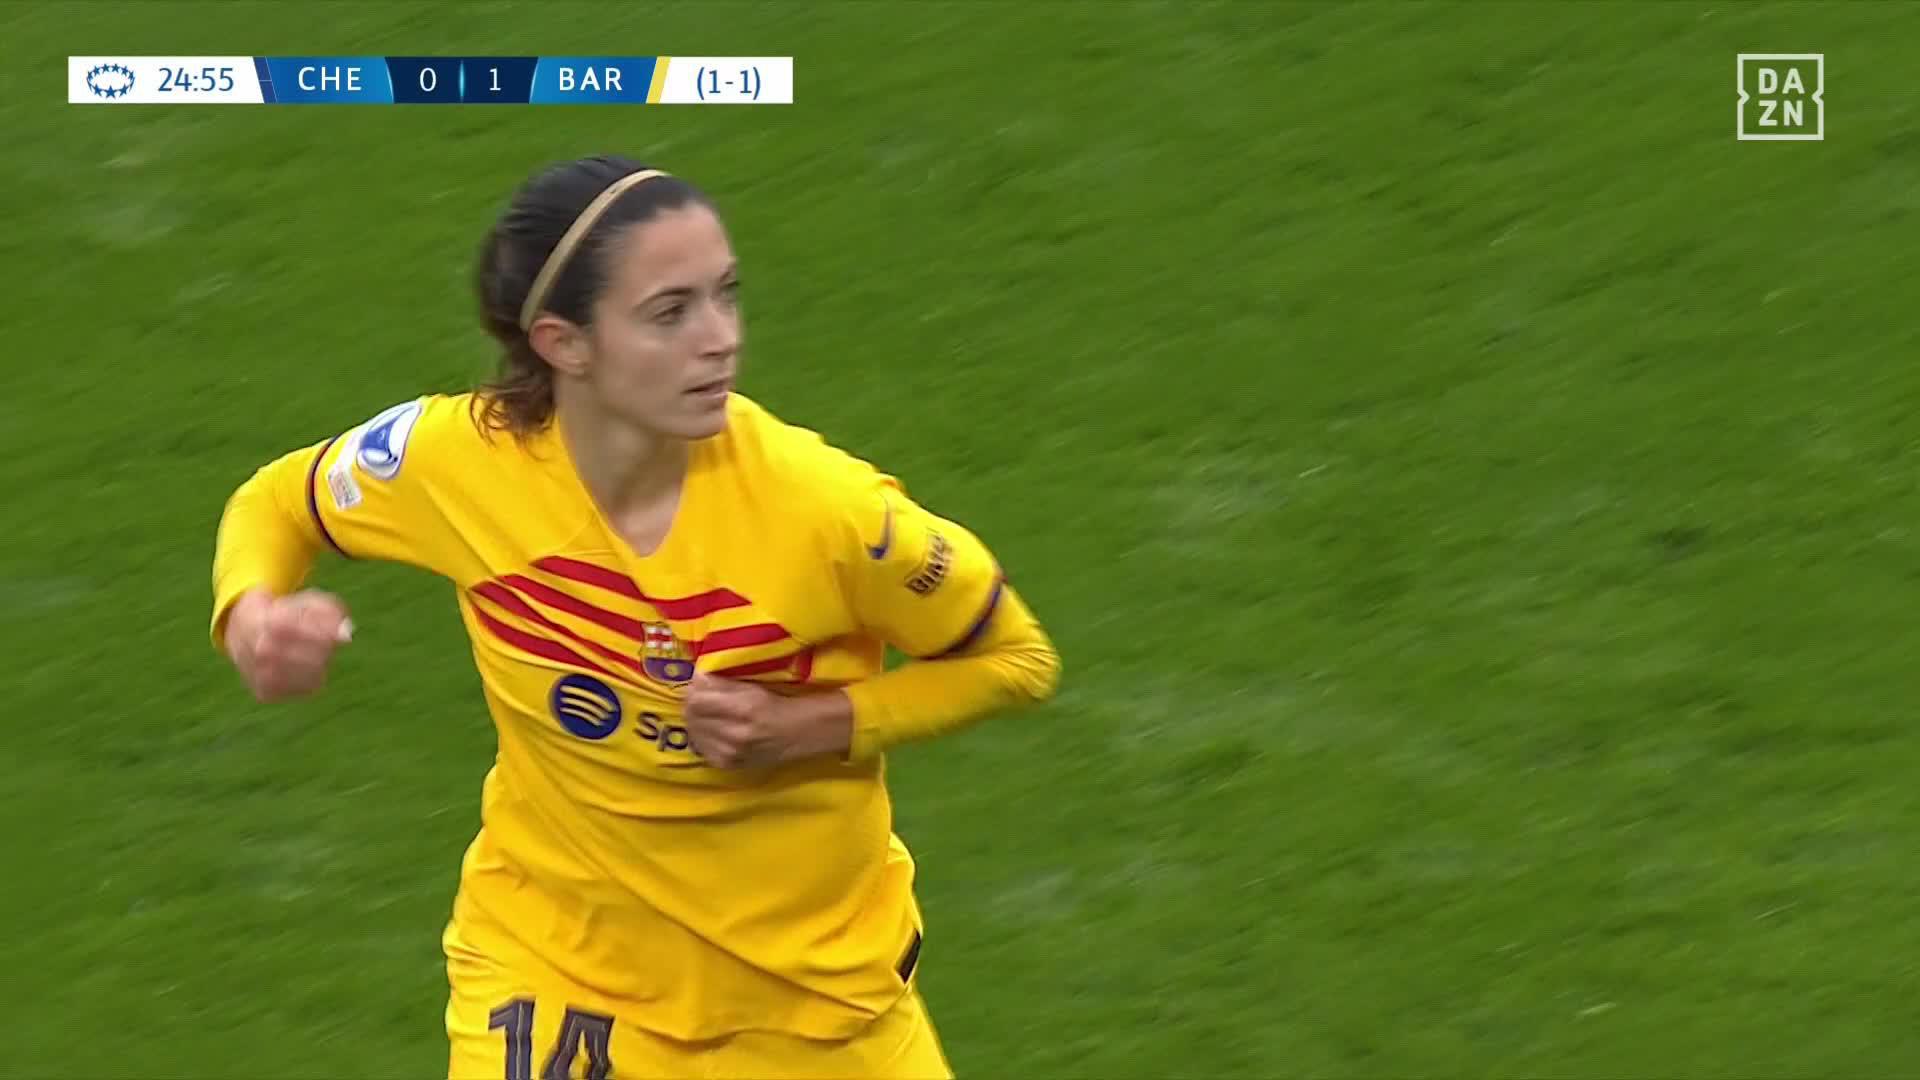 The world's best player, Aitana Bonmatí levels it! 🔥 0-1 (1-1)GAME ON!Chelsea FC Women vs. FC Barcelona, #UWCLonDAZN semi-final leg 2, LIVE and FREE on  now.